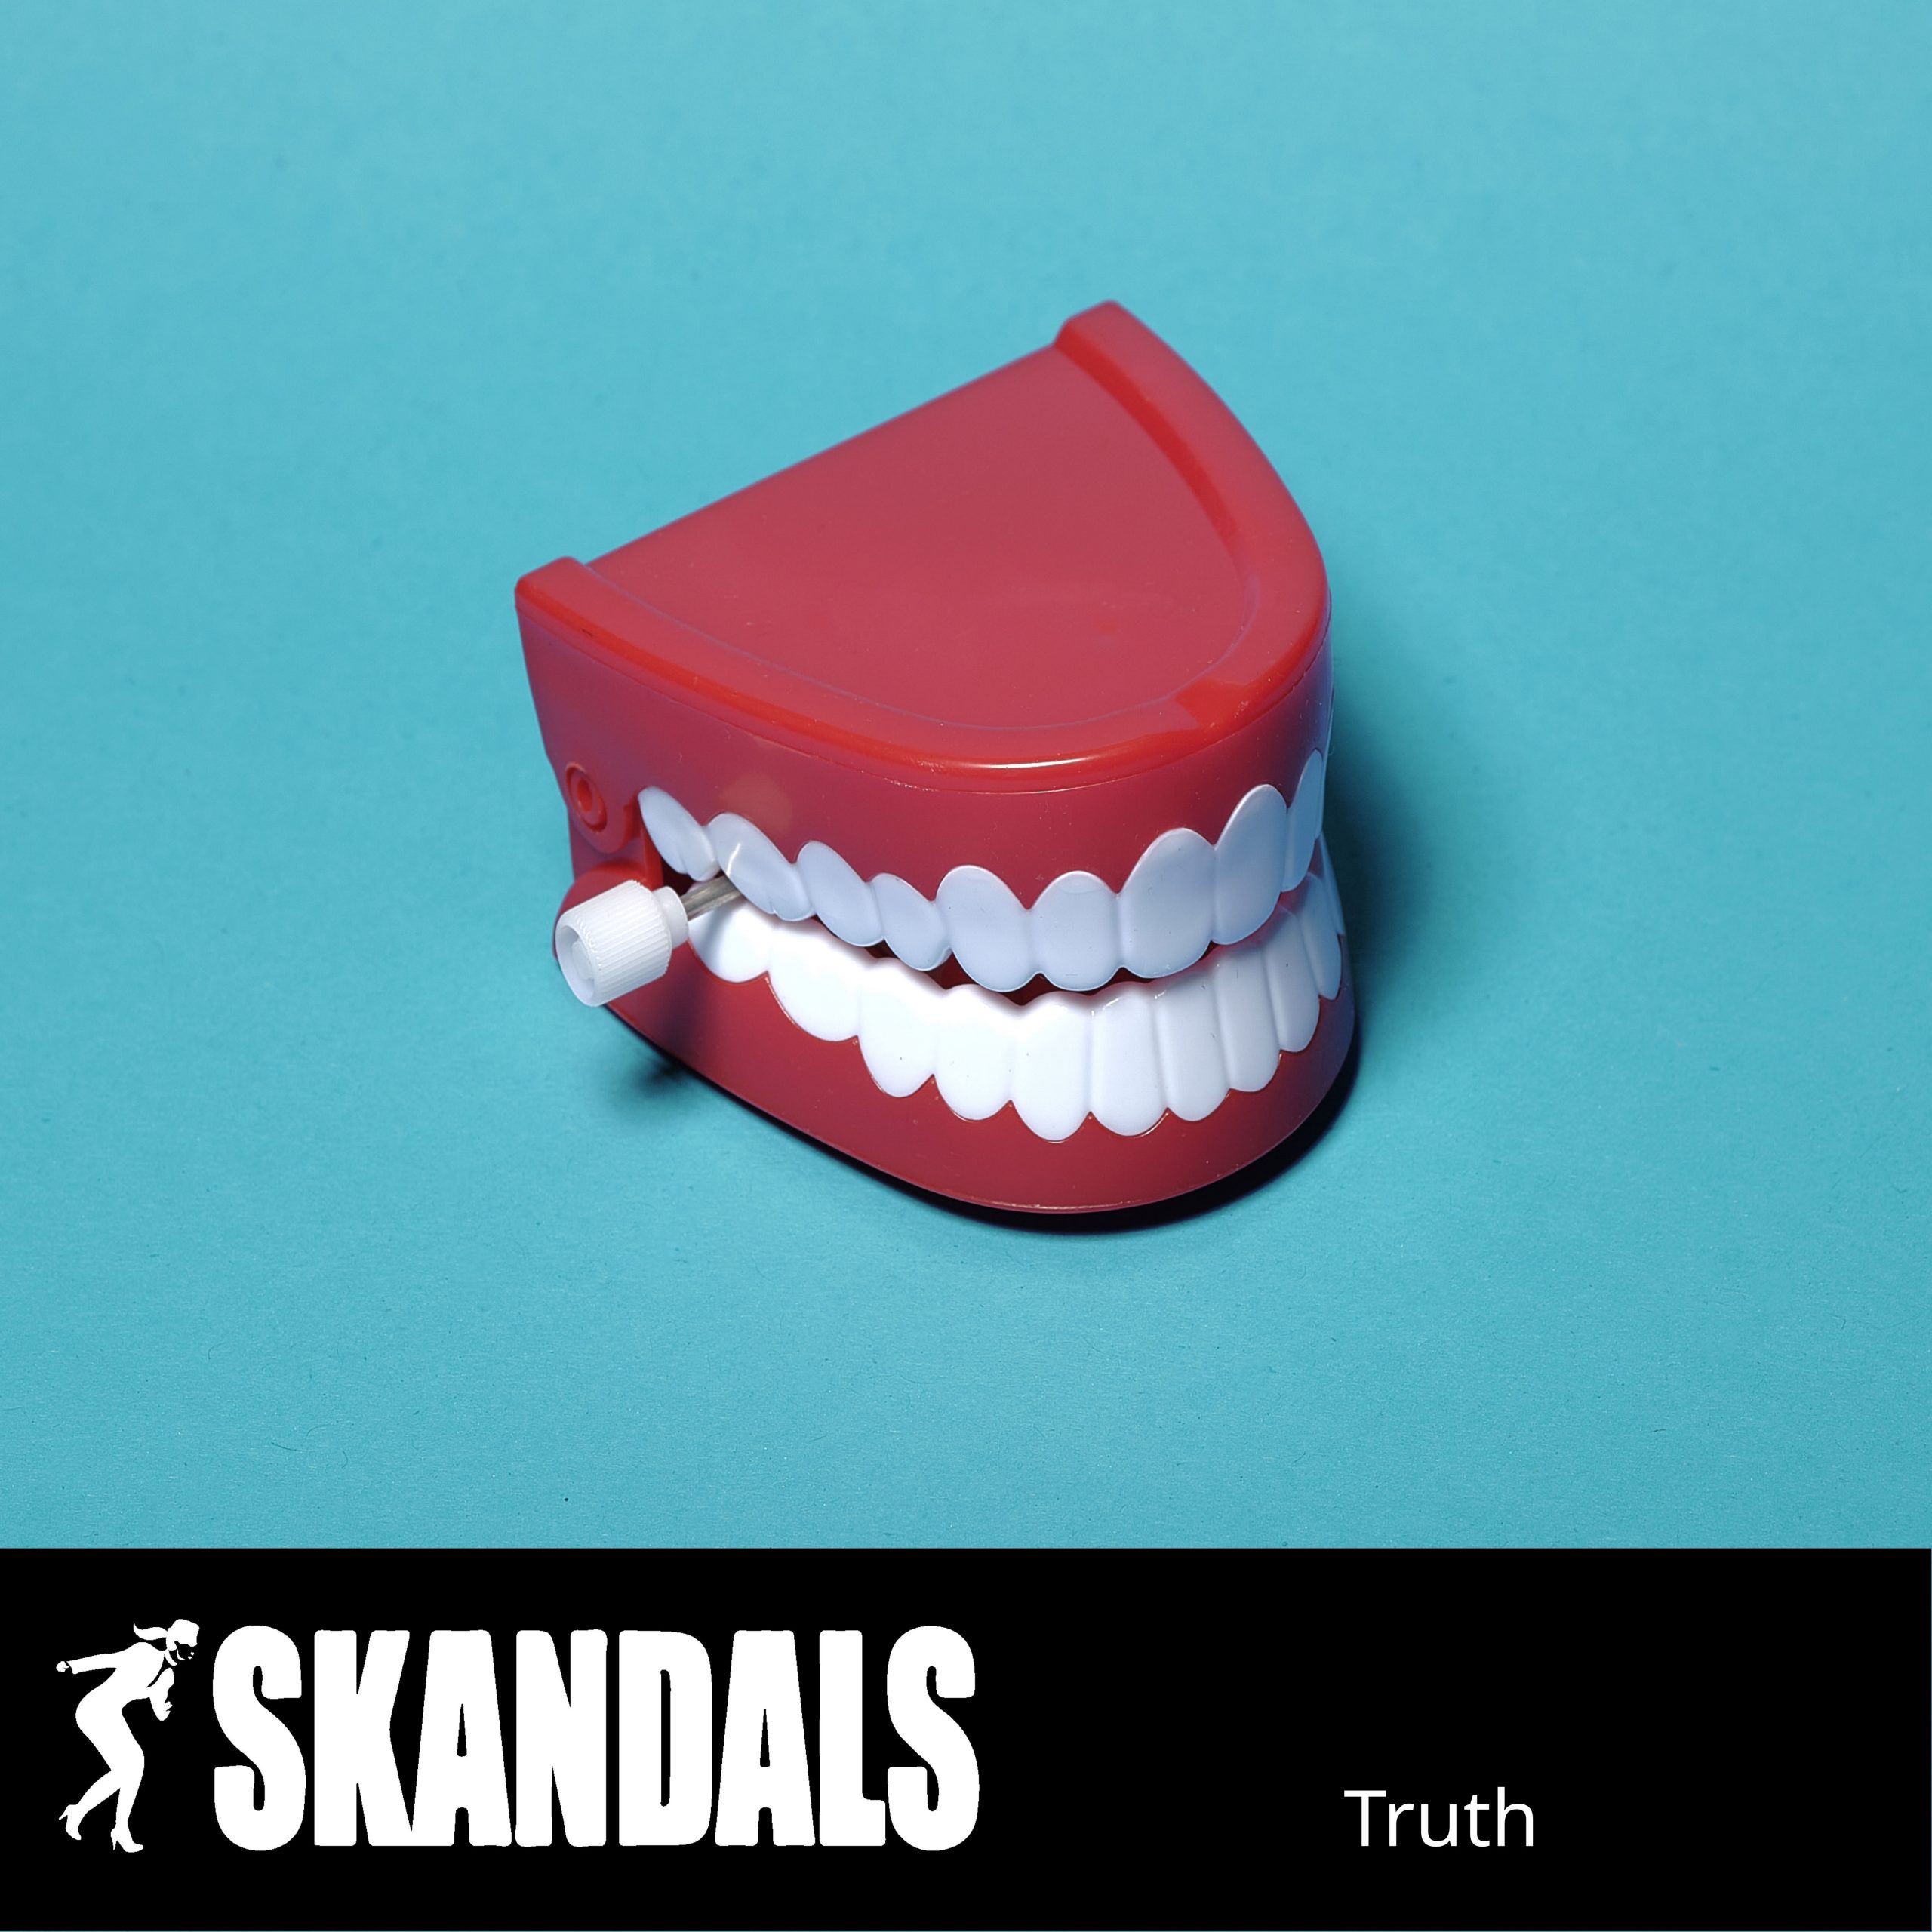 Truth song by Skandals, image is joke shop teeth